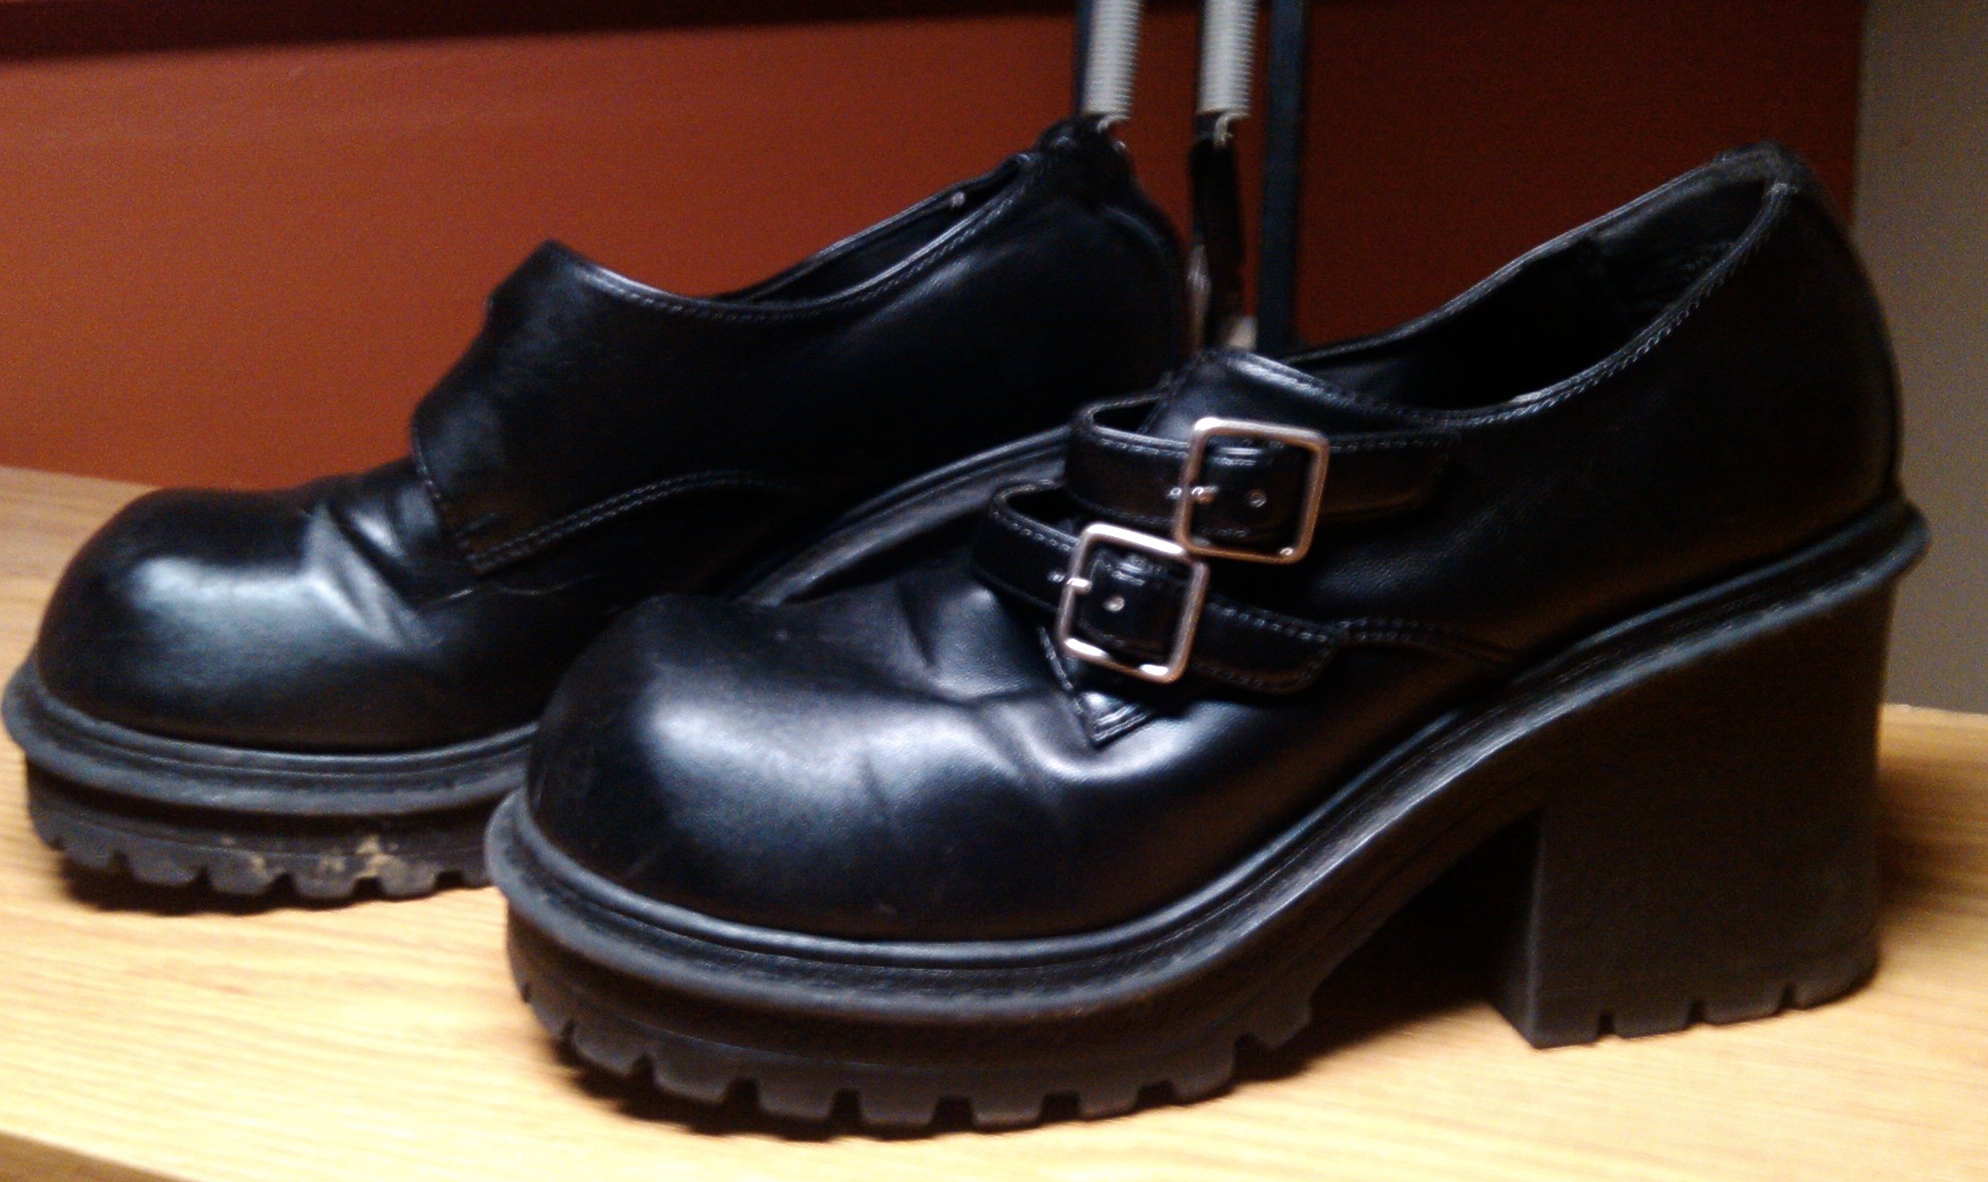 Size 7 Ladies Boots - Brand New - Black $10